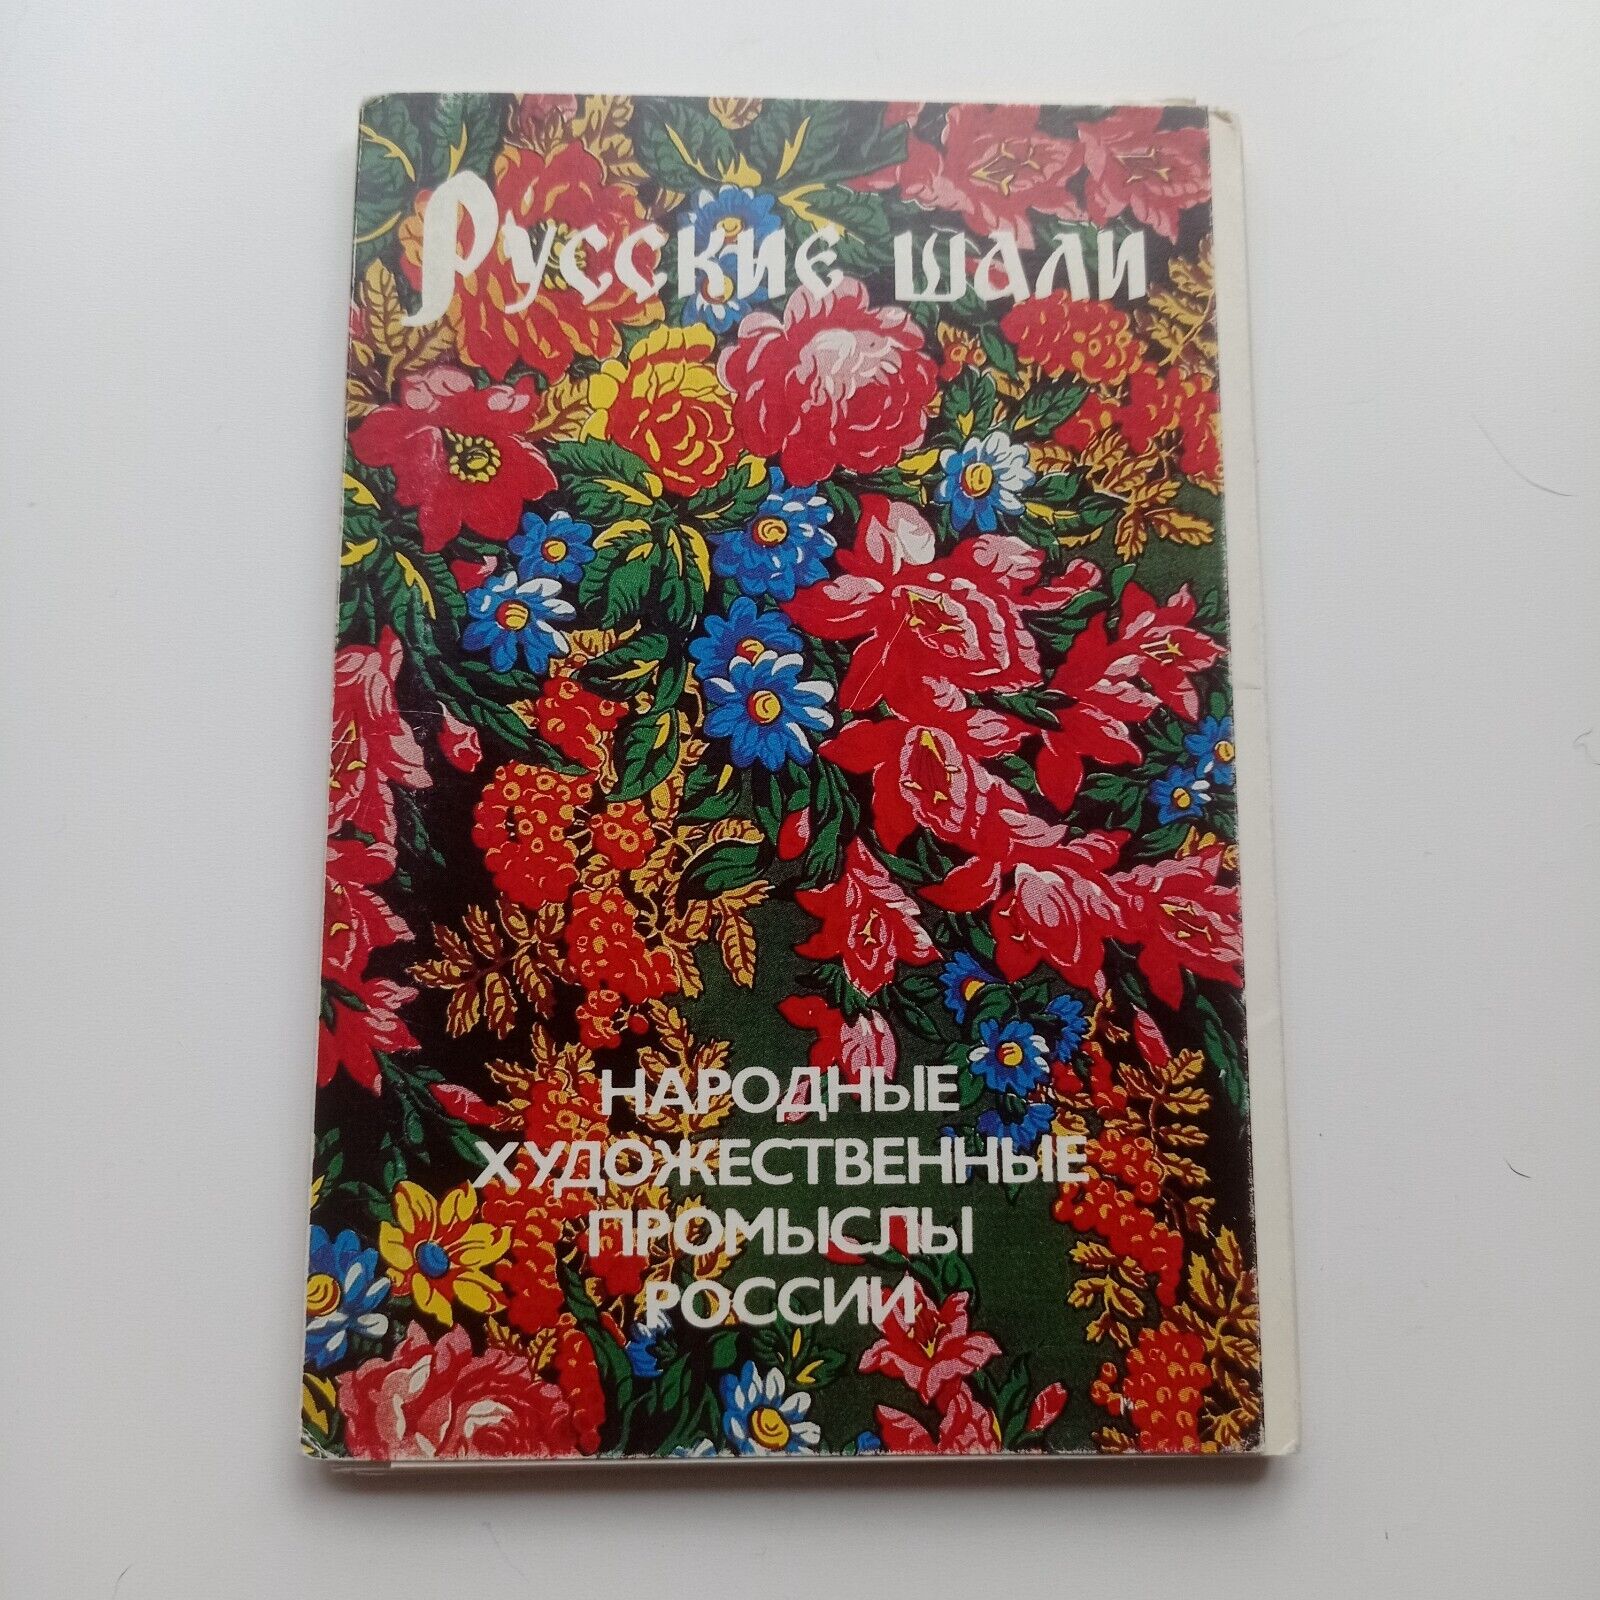 Vintage 1986 USSR Postcards Russian shawls set of 18 postcards Soviet Union ART